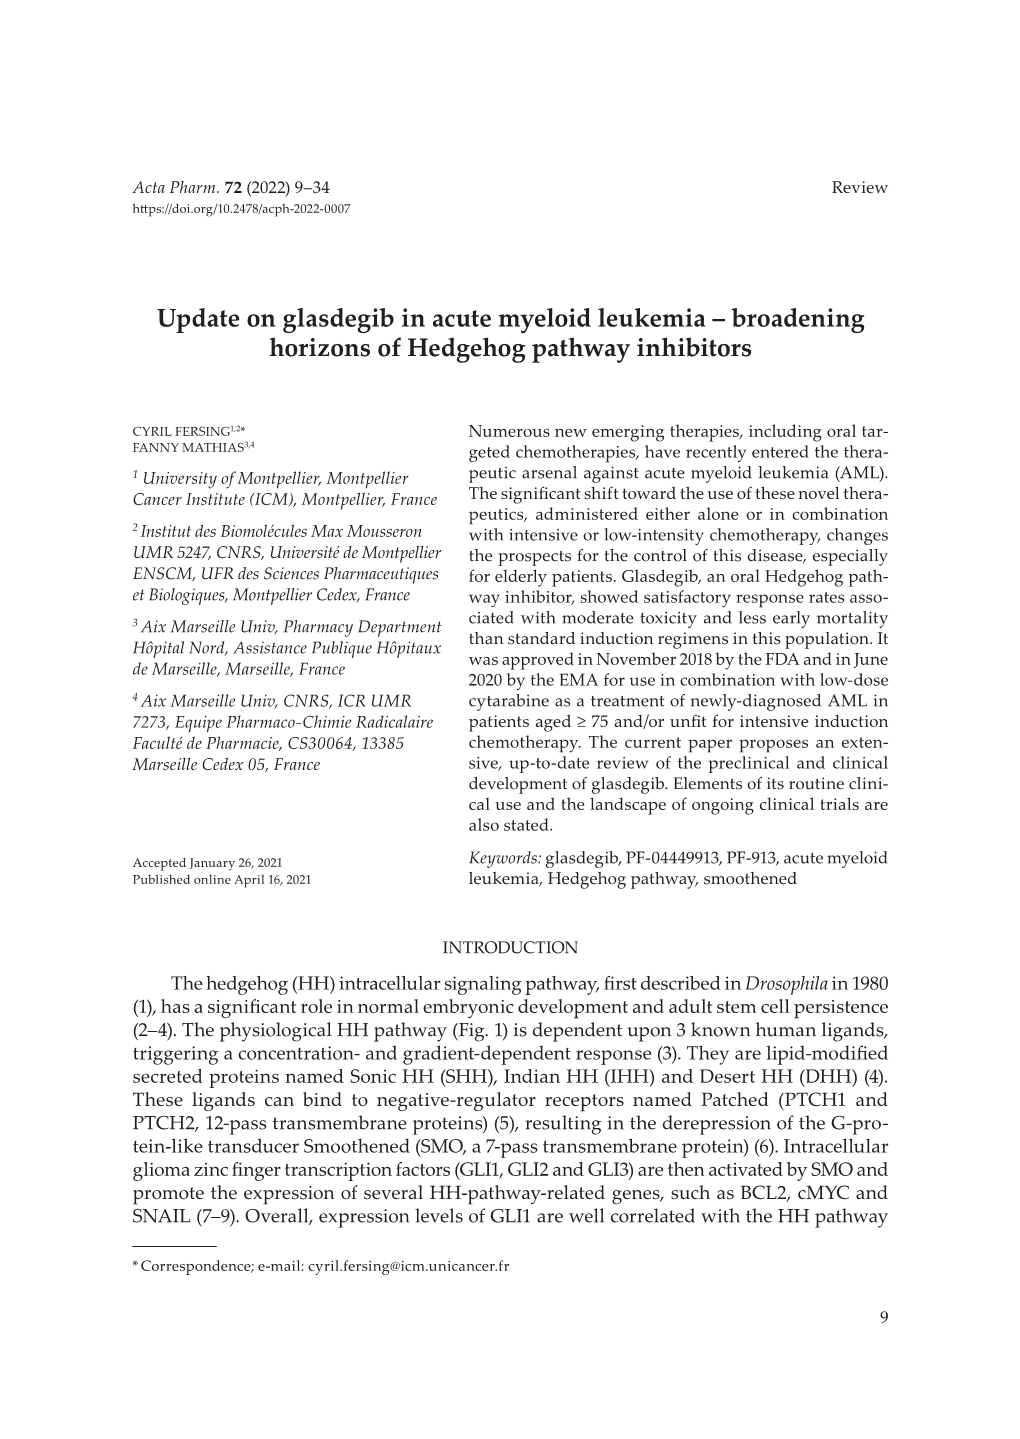 Update on Glasdegib in Acute Myeloid Leukemia – Broadening Horizons of Hedgehog Pathway Inhibitors